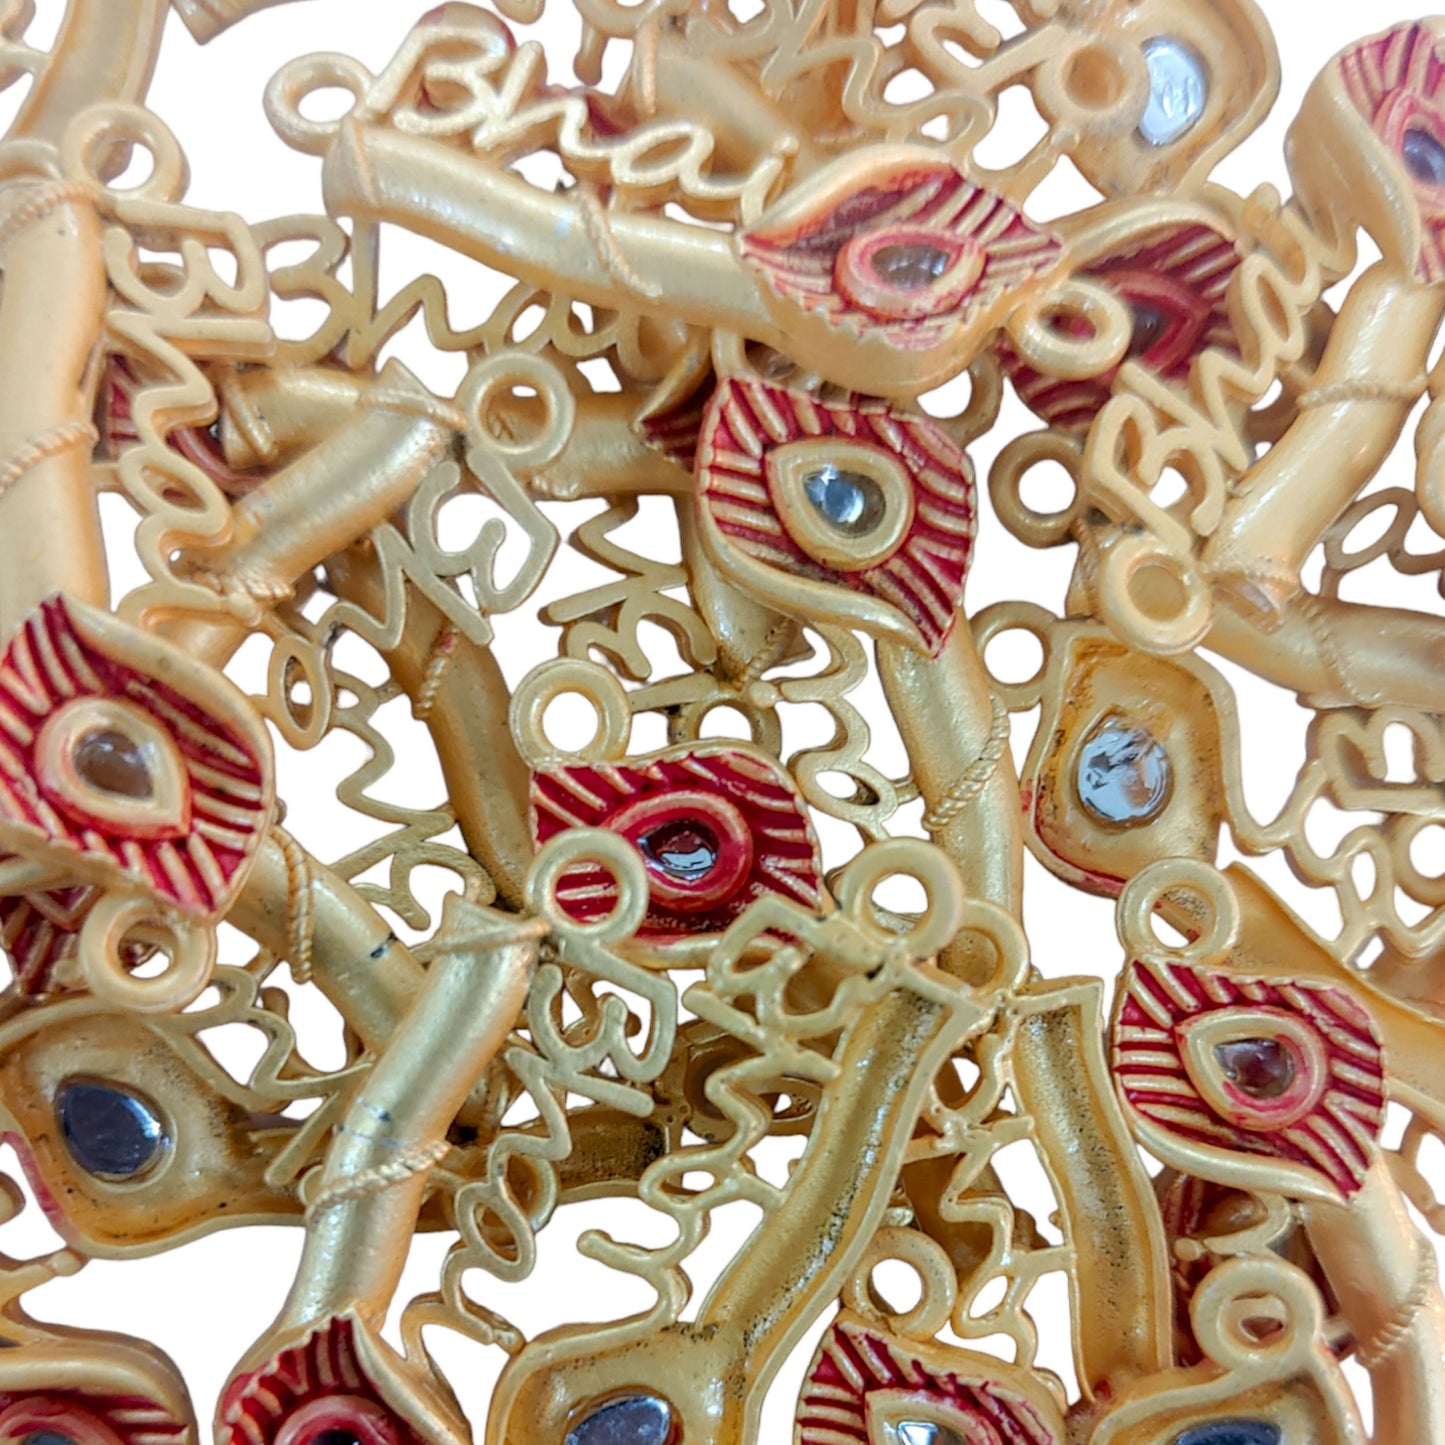 Indian Petals Bhai Shape Metal Die Cast Rakhi Pendant Motif for Rakhi, Jewelry designing and Craft Making or Decor